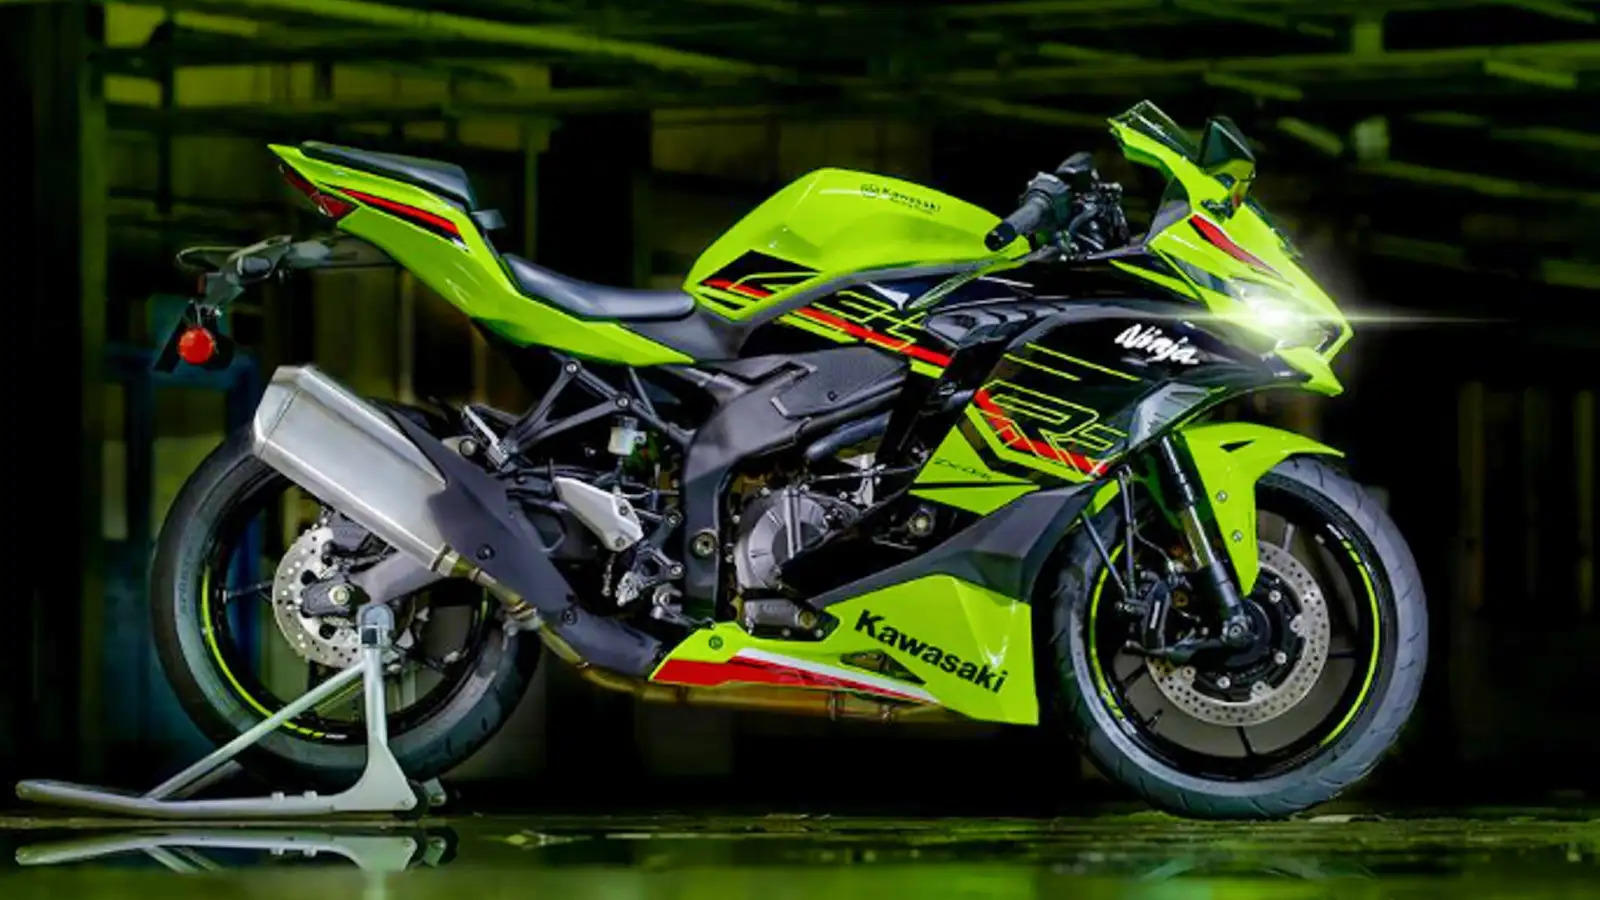 Kawasaki Ninja ZX-4R : Kawasaki जल्द लॉन्च करेगी सस्ती Ninja Bike, जानिये क्या होगी कीमत 